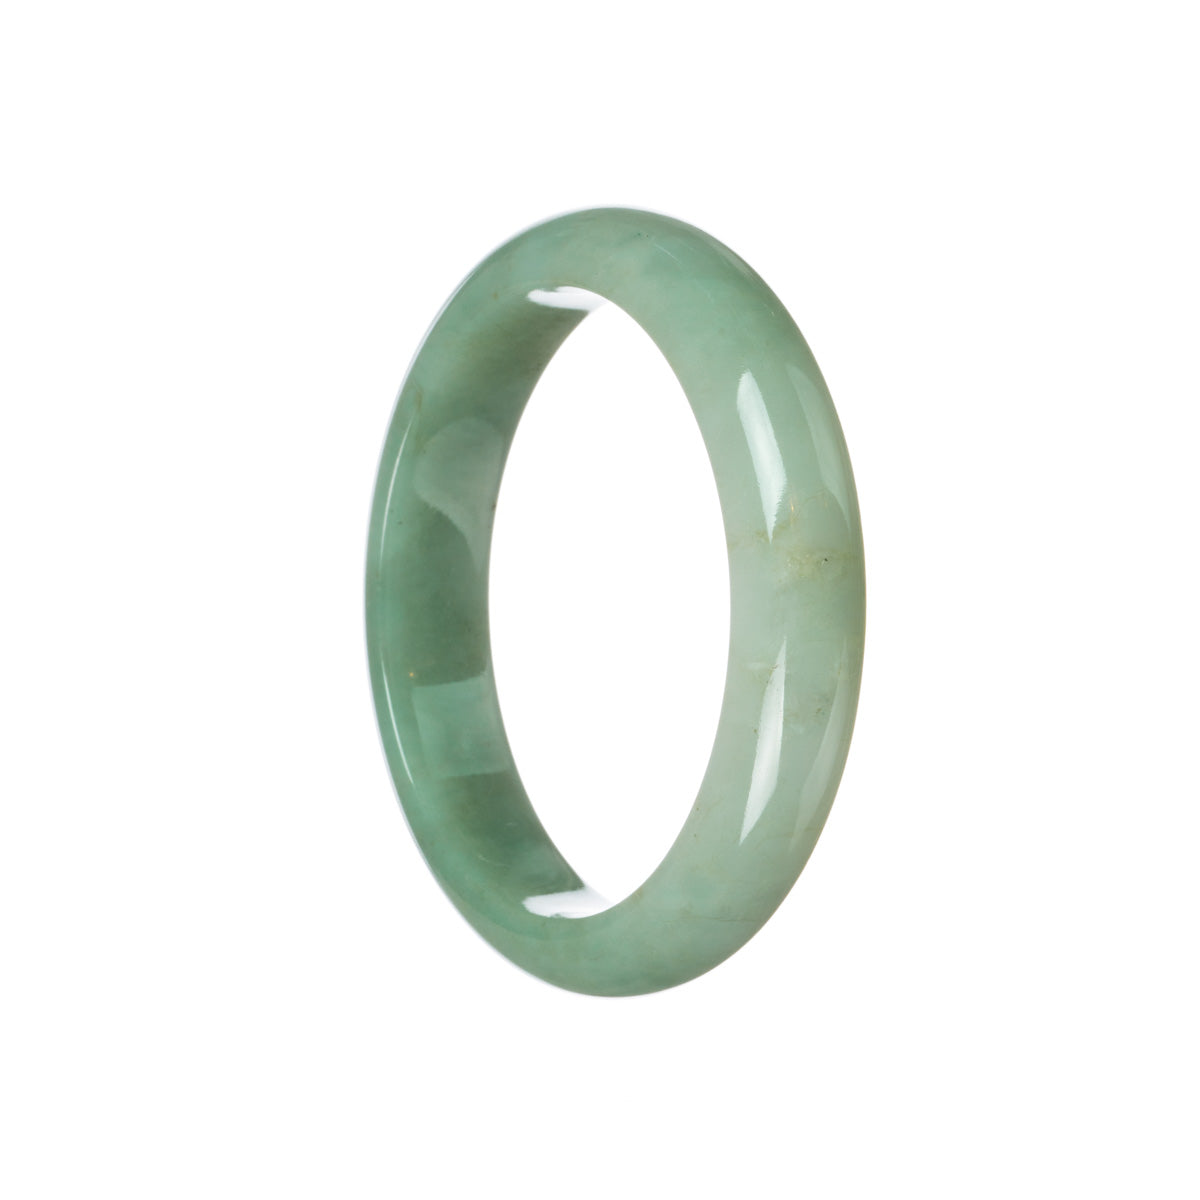 Genuine Grade A Green Jade Bangle - 59mm Semi Round